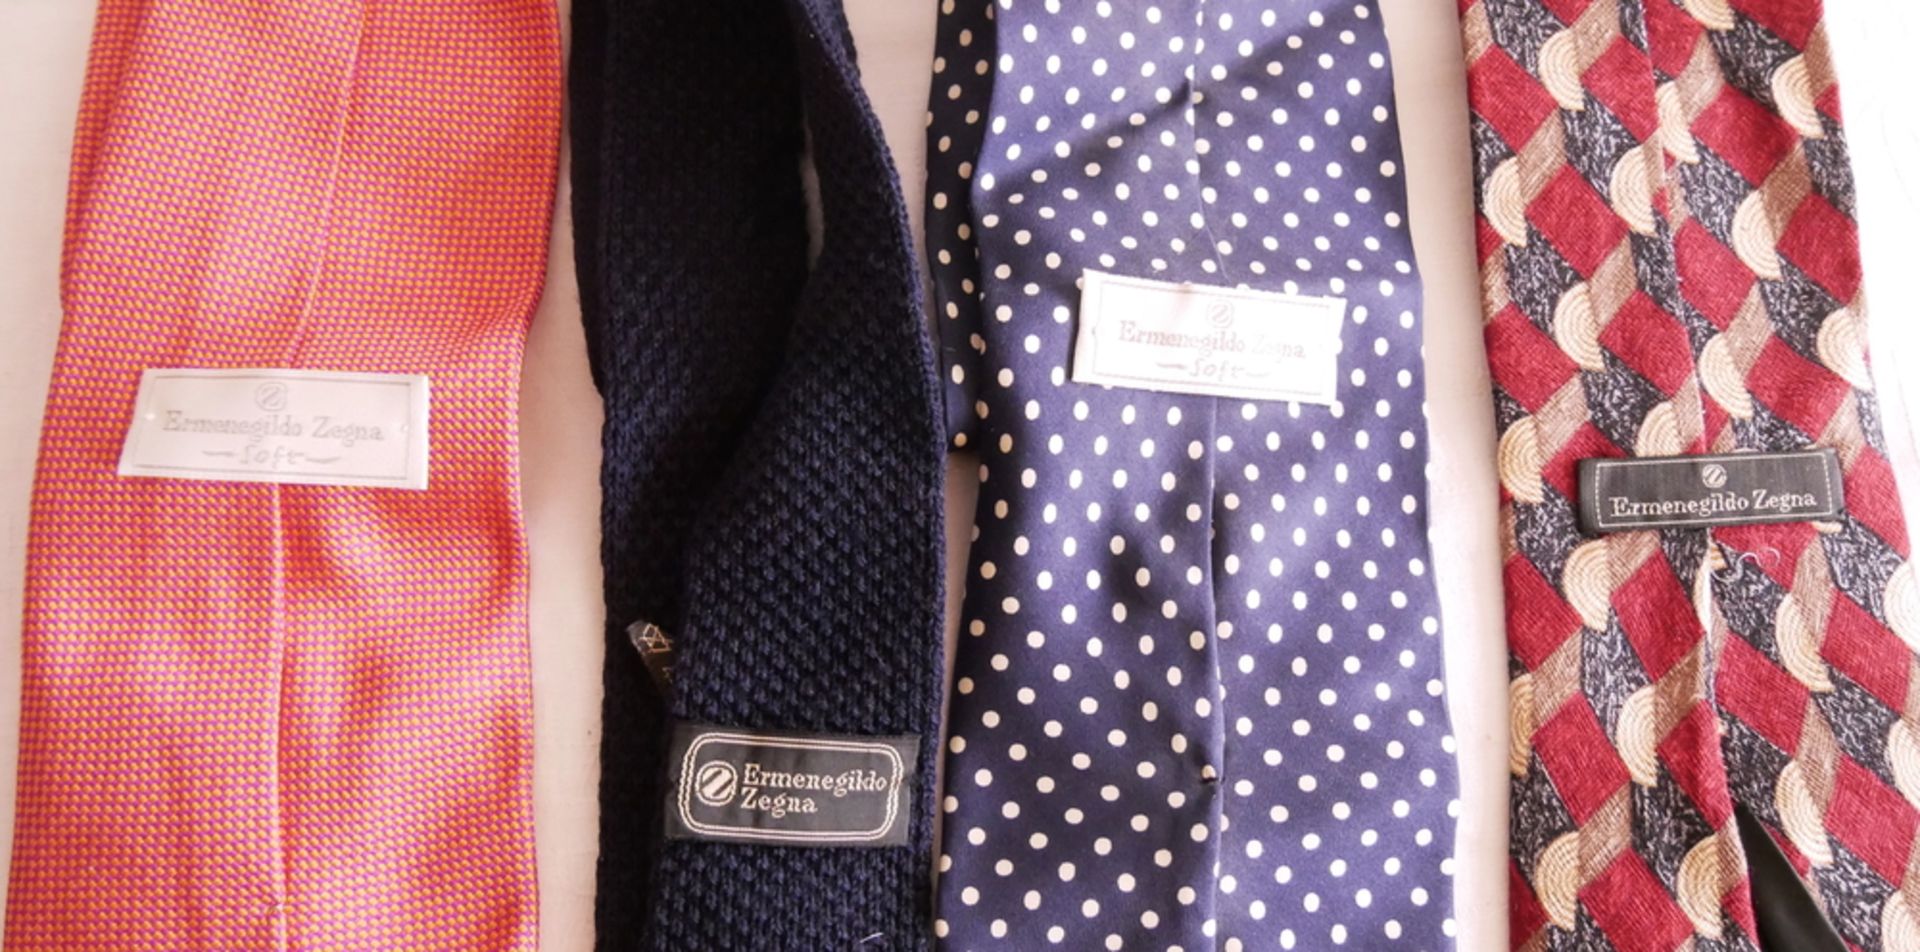 4 Krawatten, Ermenegildo Zegna, verschiedene Modelle. Guter getragener Zustand. - Image 2 of 2